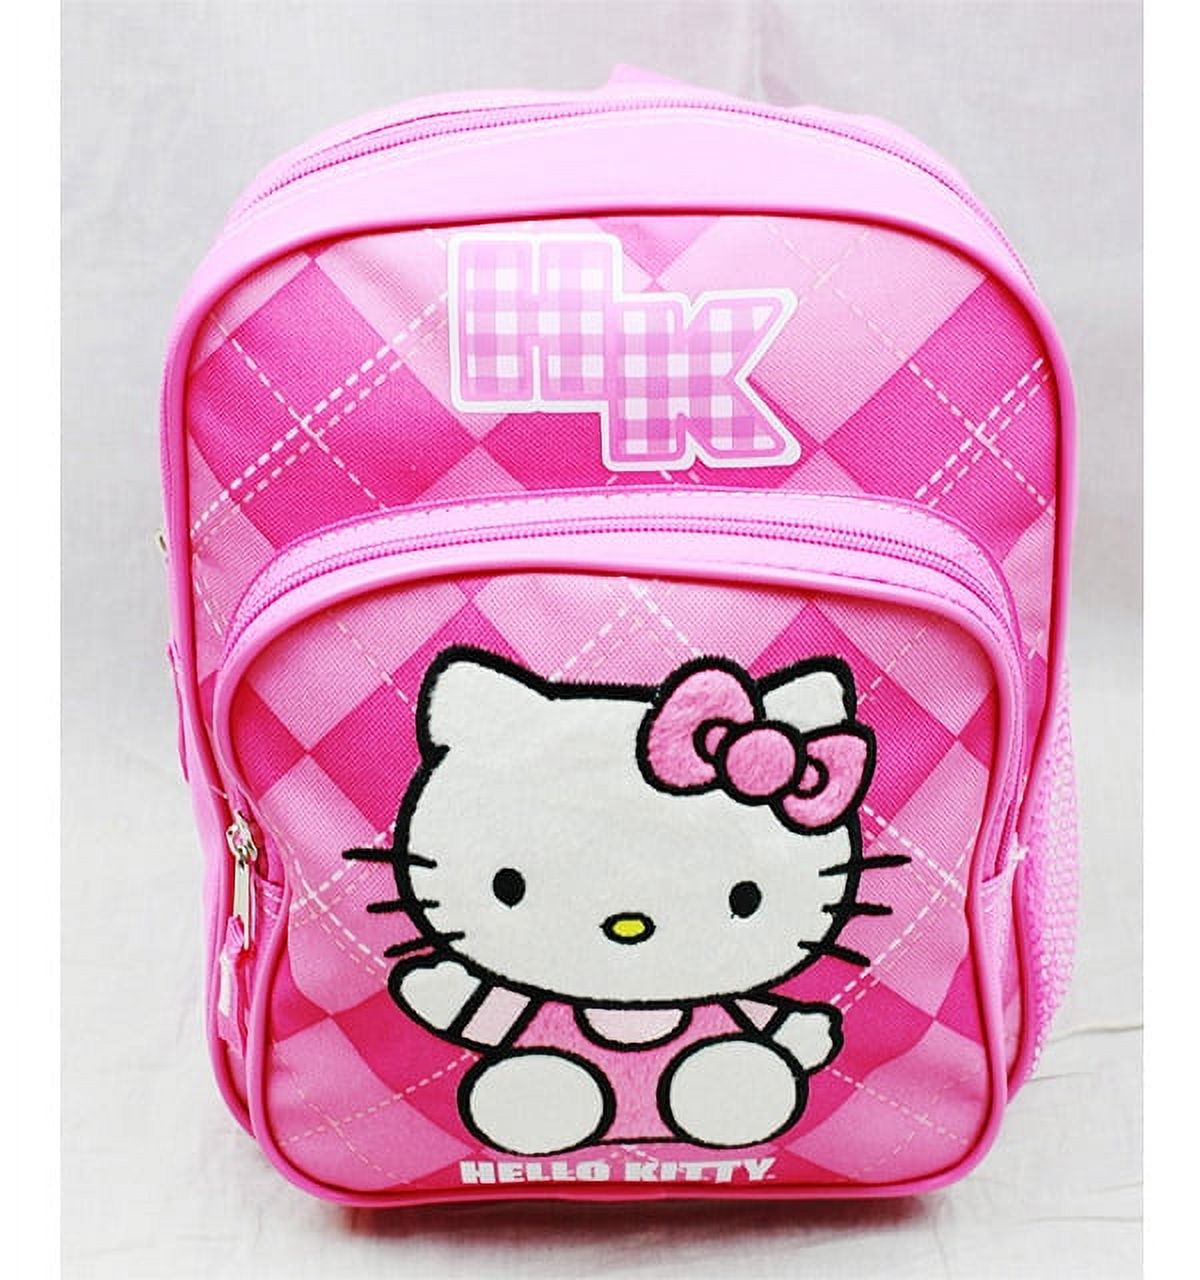 Mini Backpack - Hello Kitty - Pink Checker New School Bag Book Girls 82080 - image 1 of 3